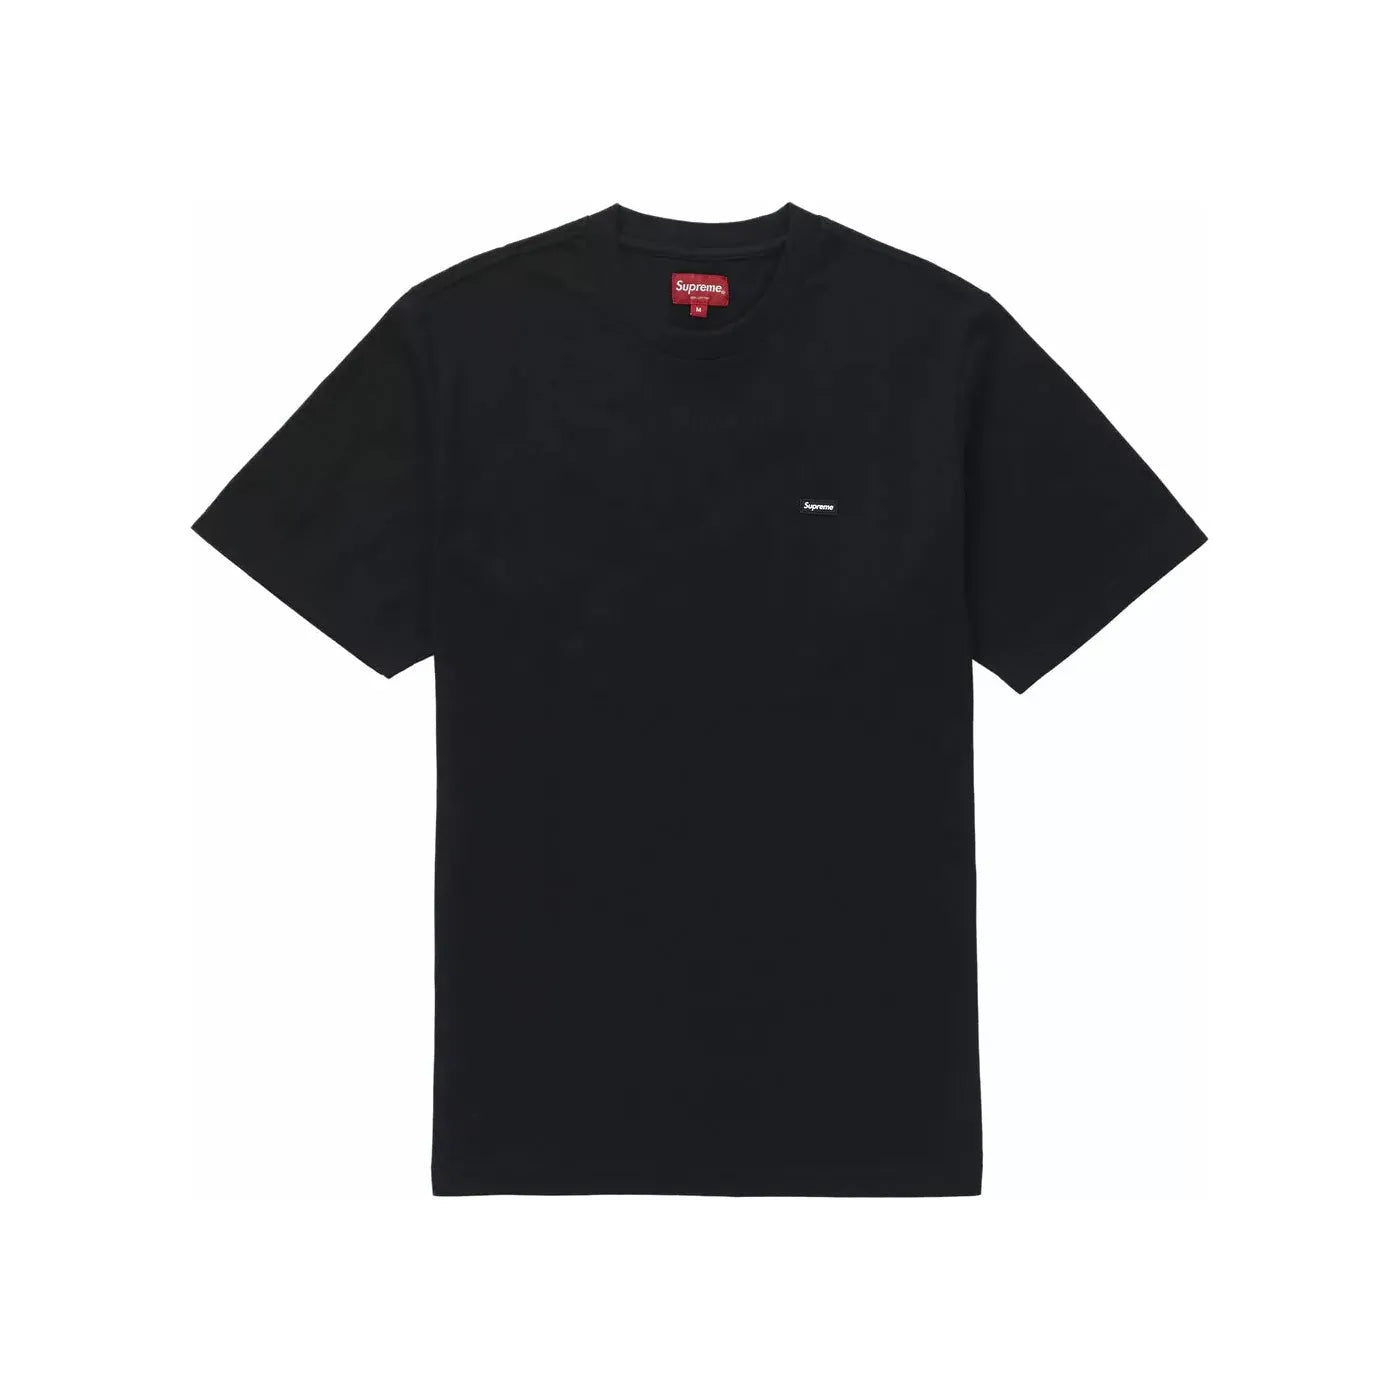 Tシャツ/カットソー(半袖/袖なし)19SS Supreme Small Box Logo Tee Navy L